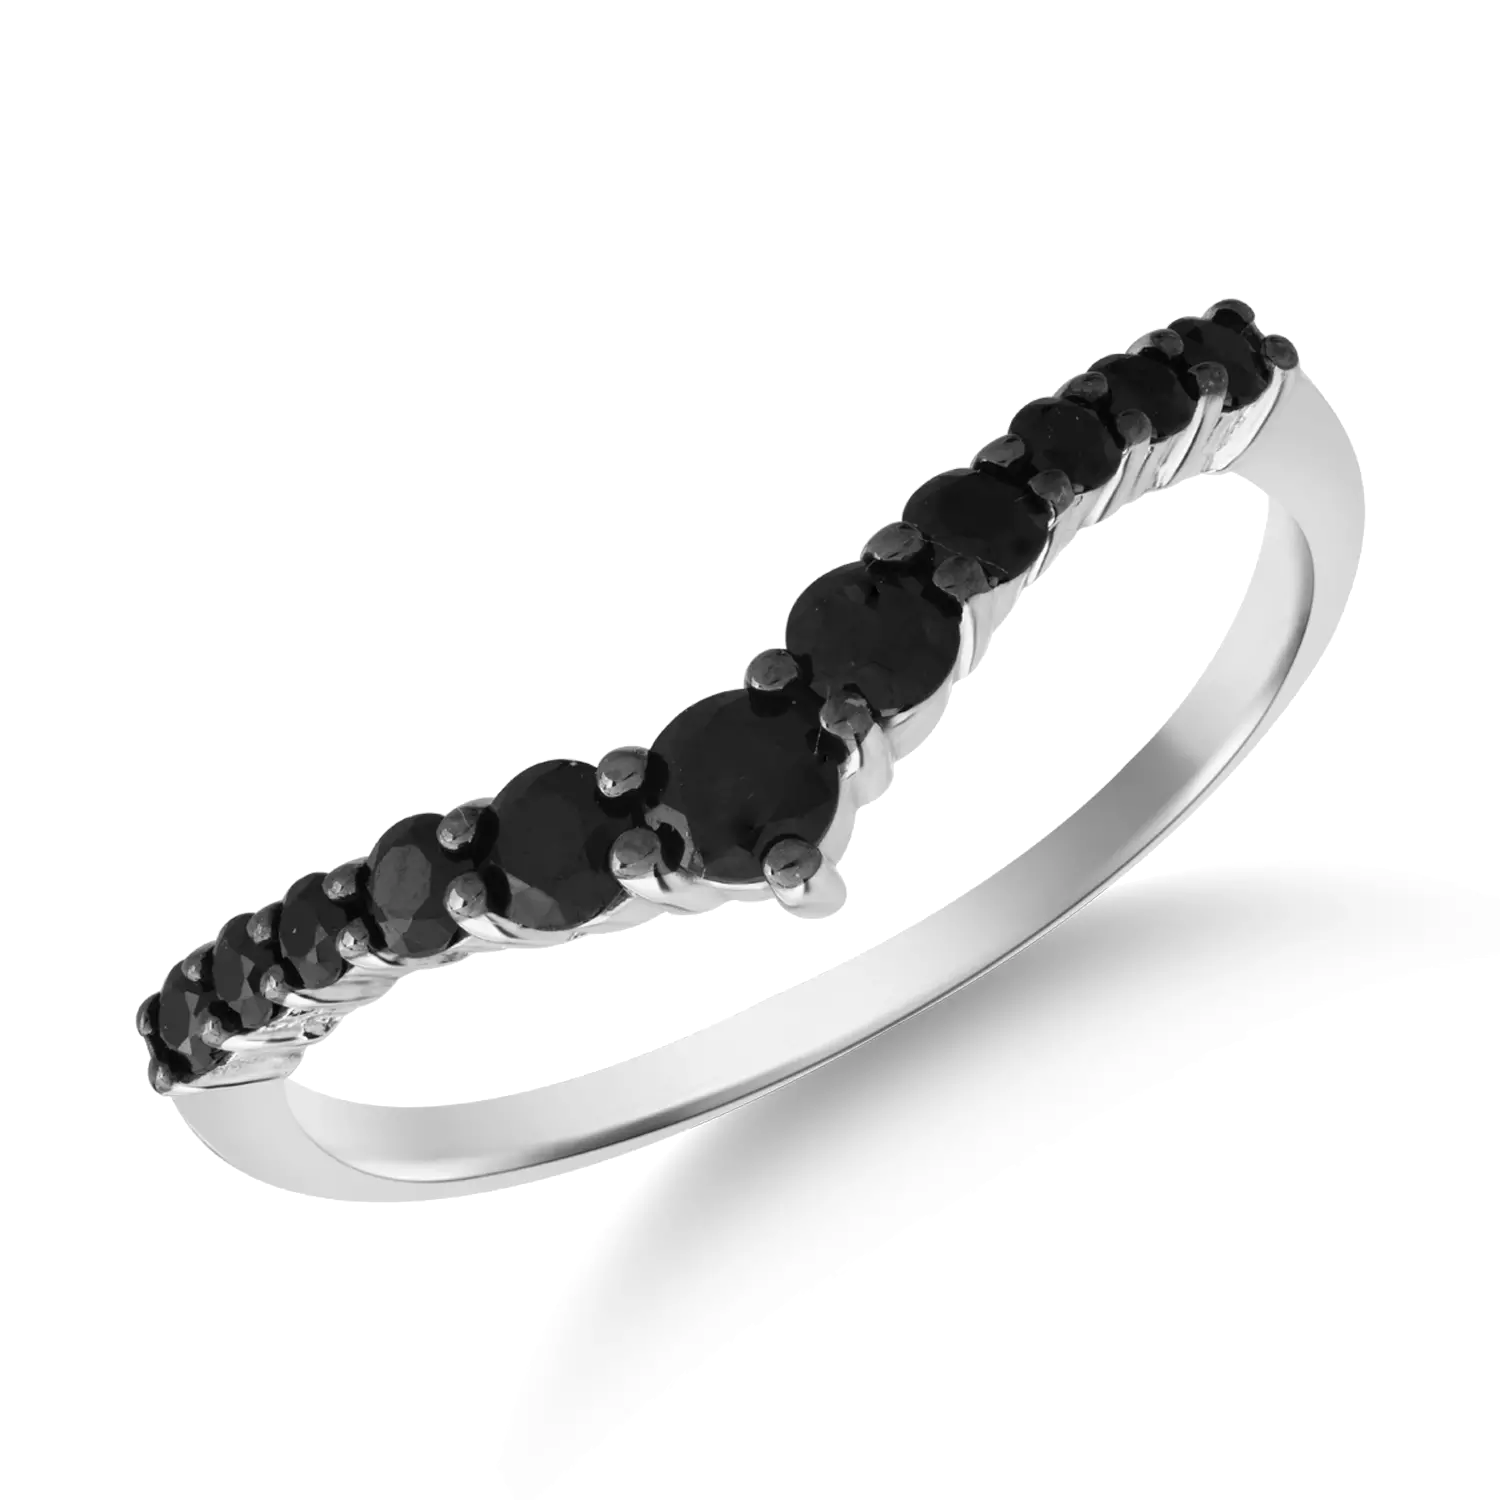 White gold half eternity ring with microsetting zirconia